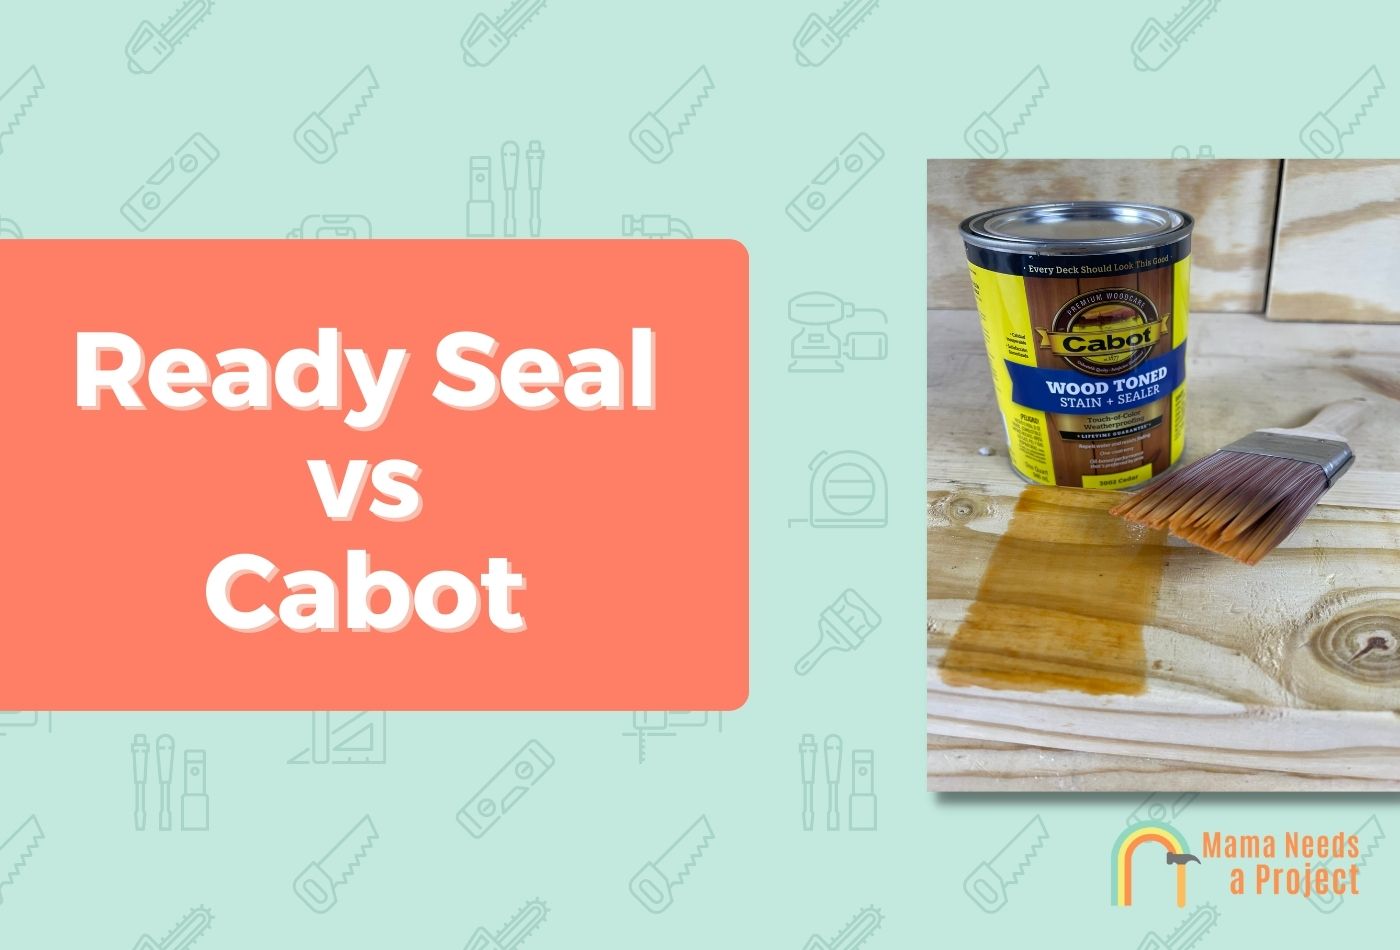 Ready Seal vs Cabot